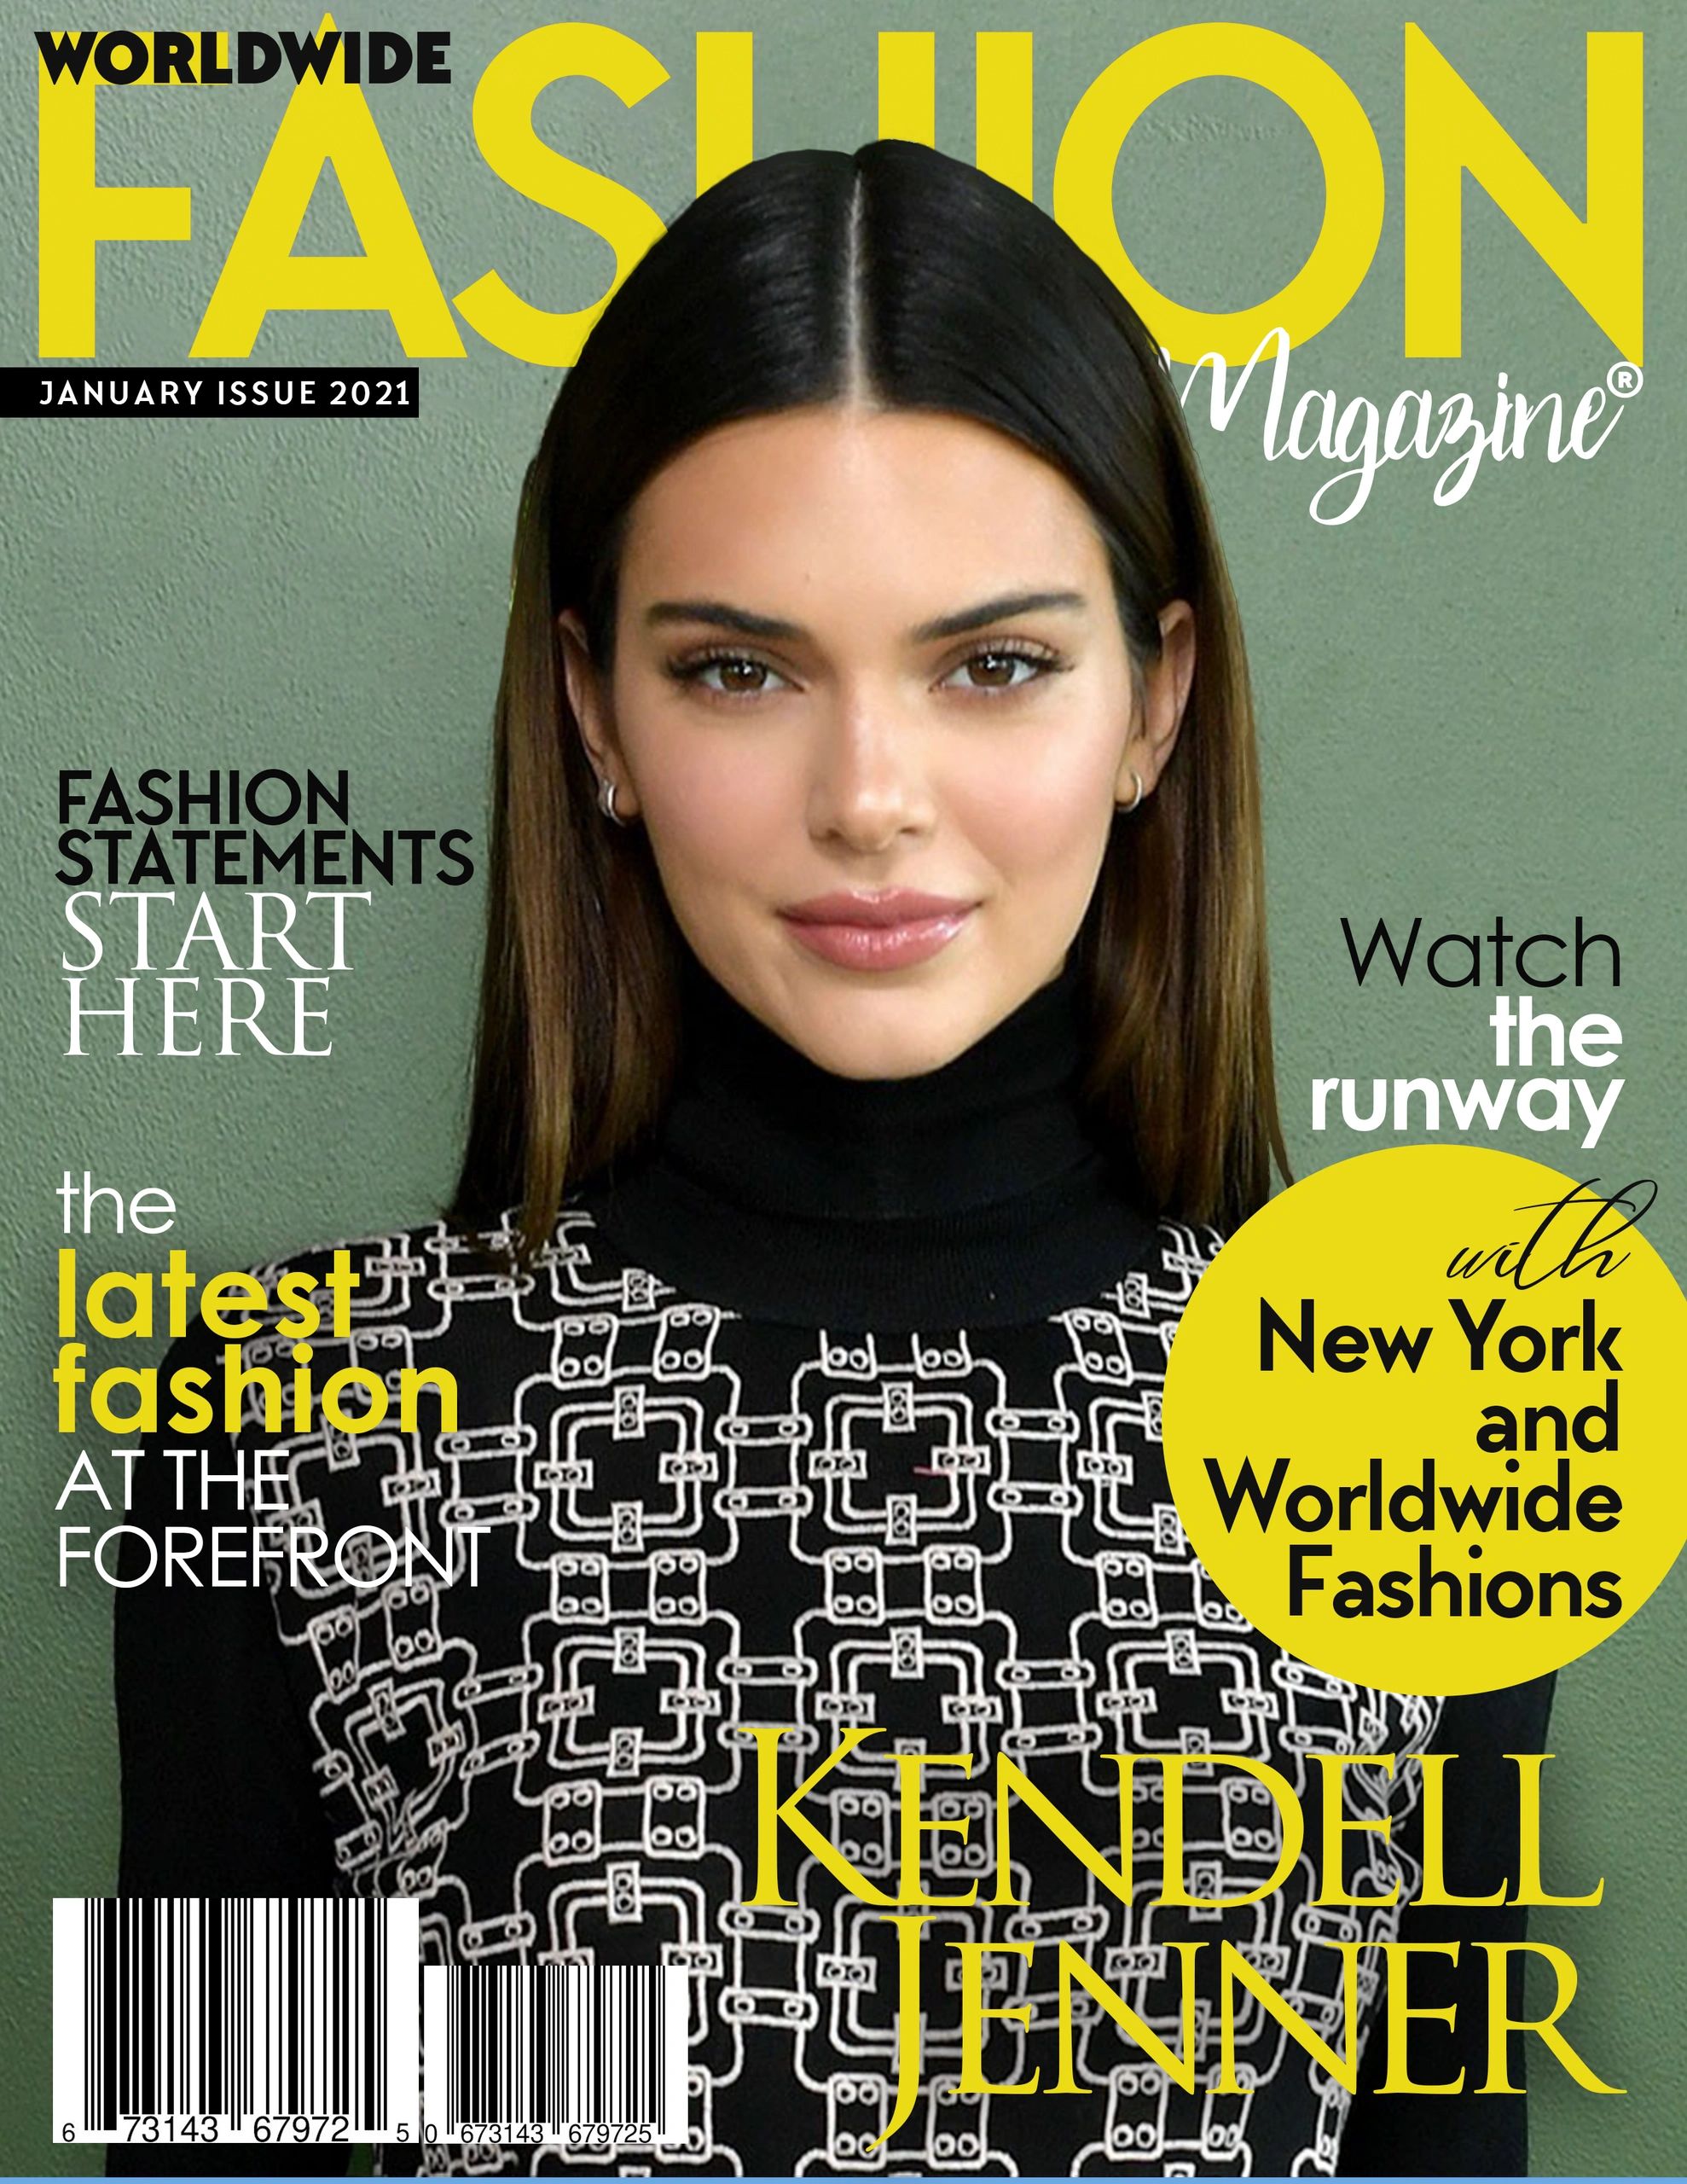 New York Worldwide Fashion Magazine - A Registered Trademark